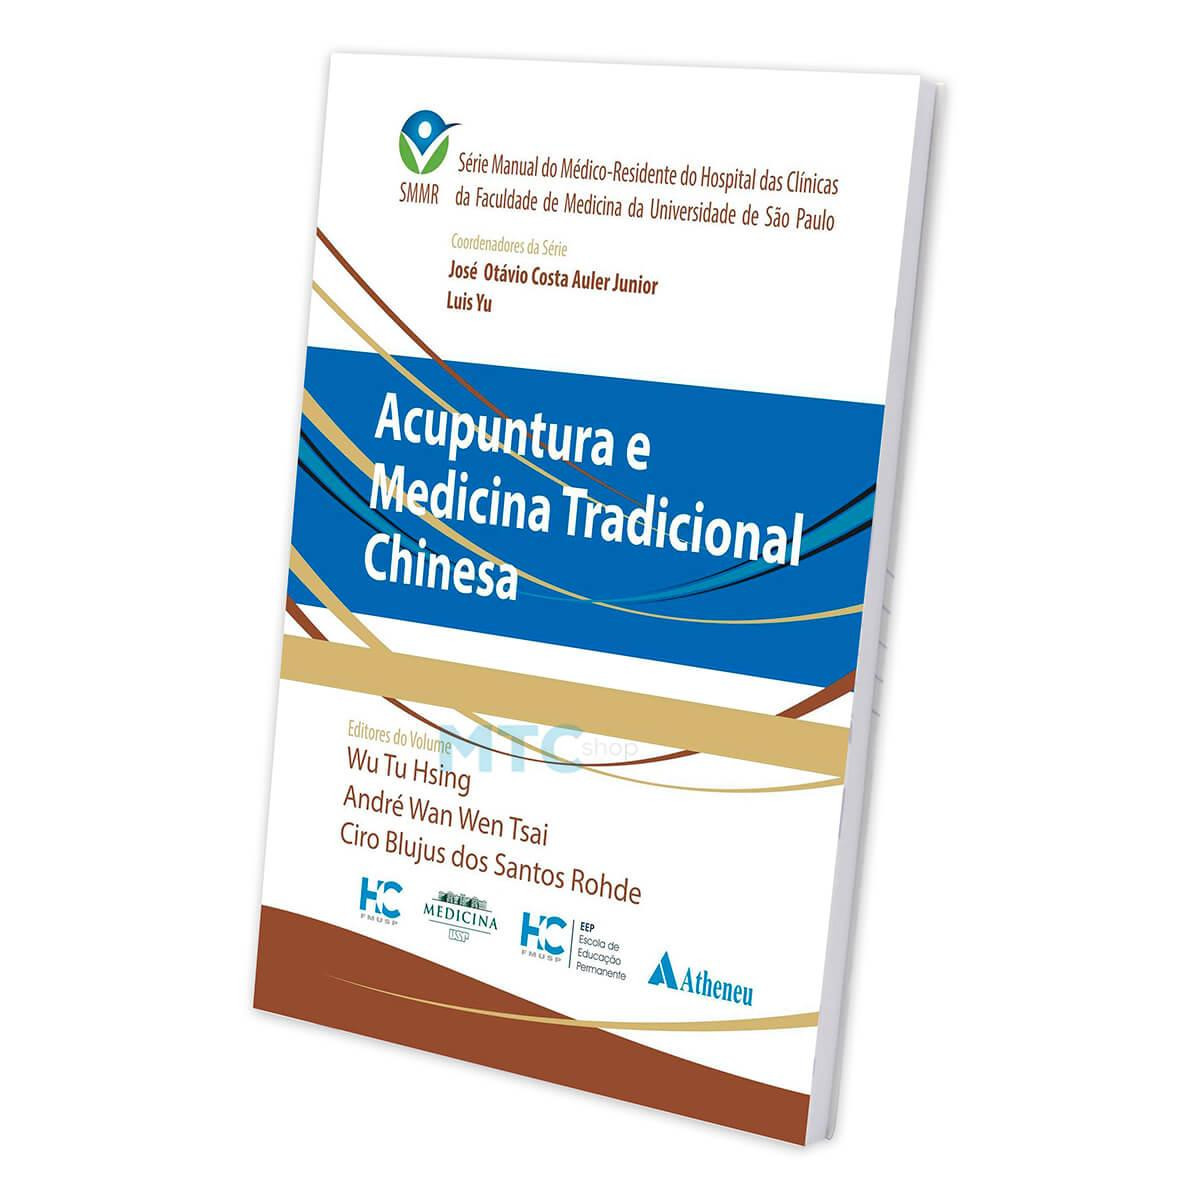  Acupuntura e Medicina Tradicional Chinesa - SMMR - HCFMUSP